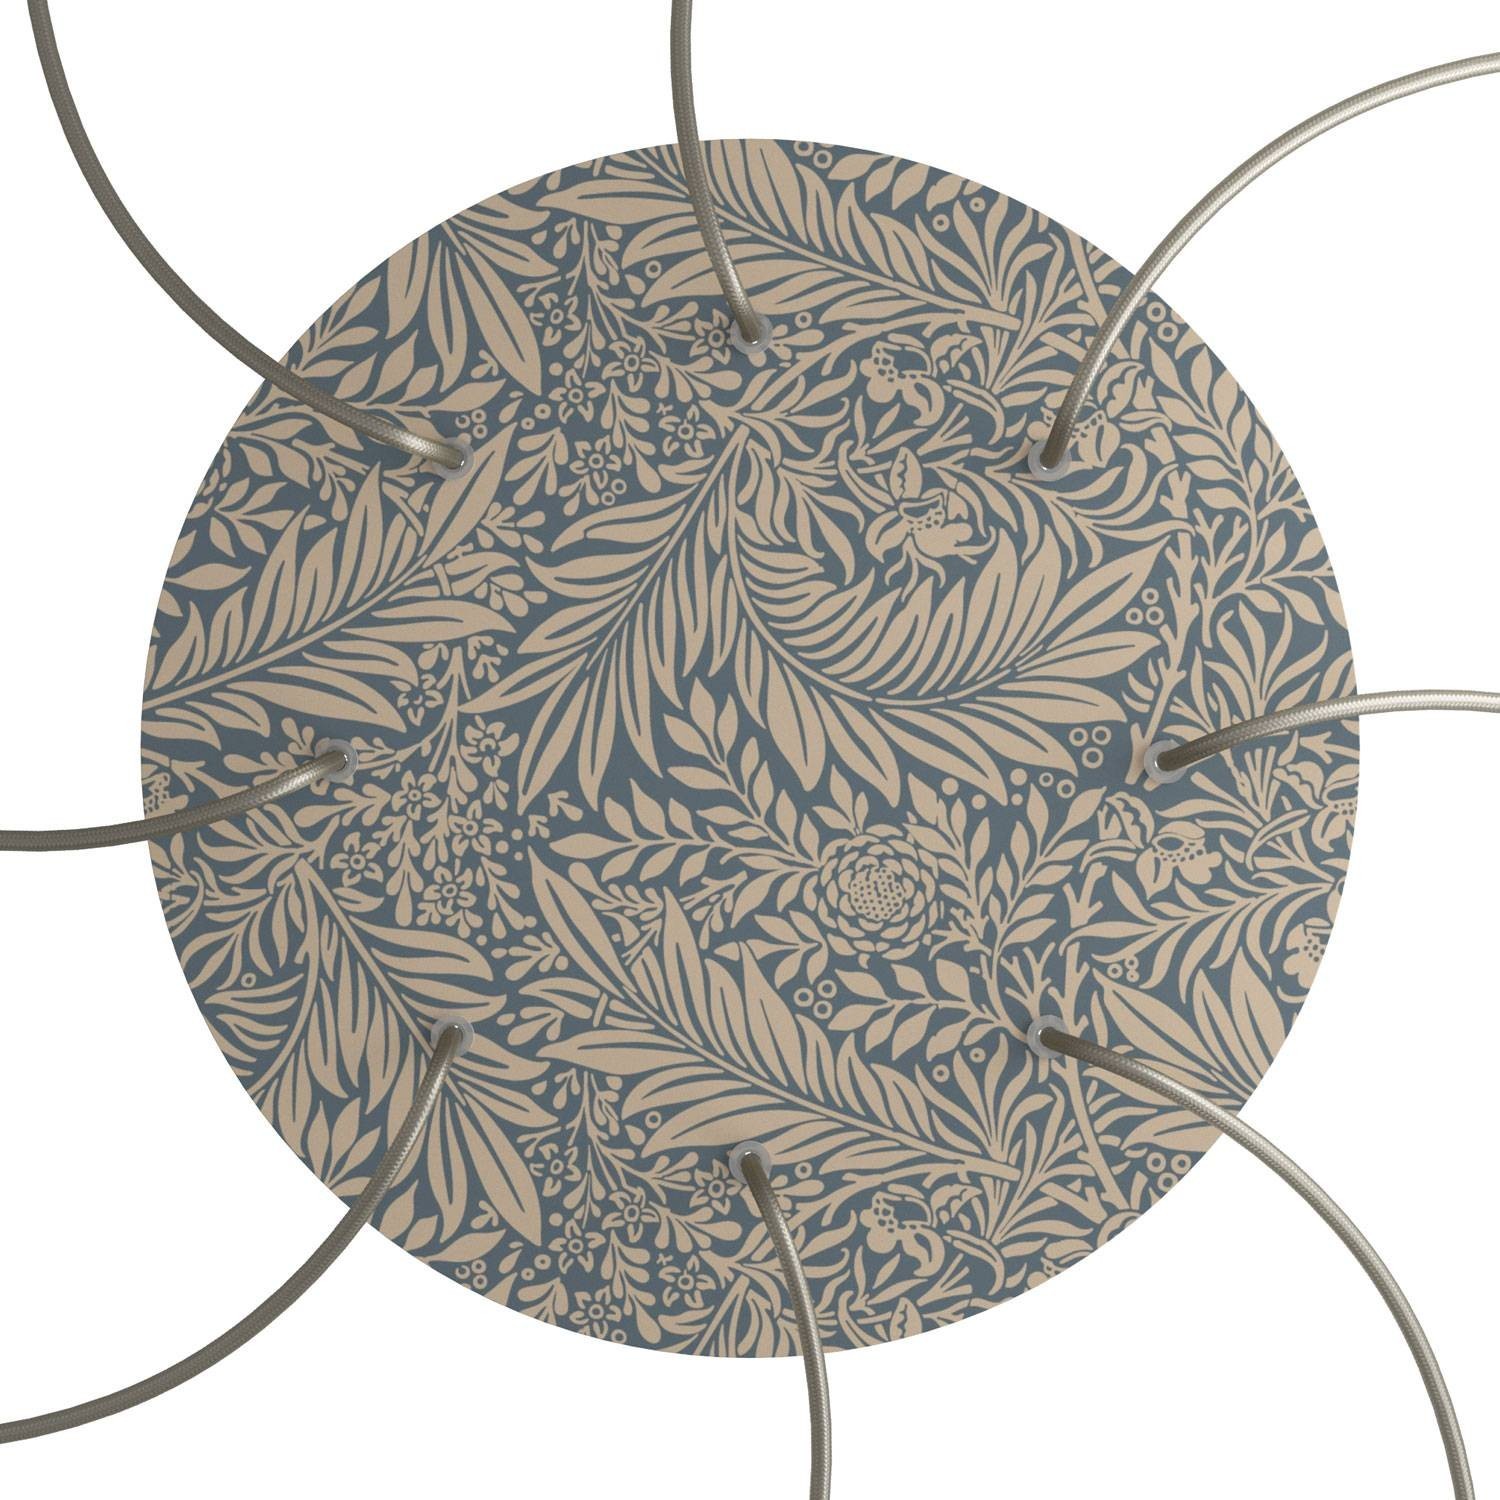 Velika okrugla dekoracija za stropnu rozetu 400 mm - Rose-One sistem s 8 rupa i 4 bočne rupe - PROMO